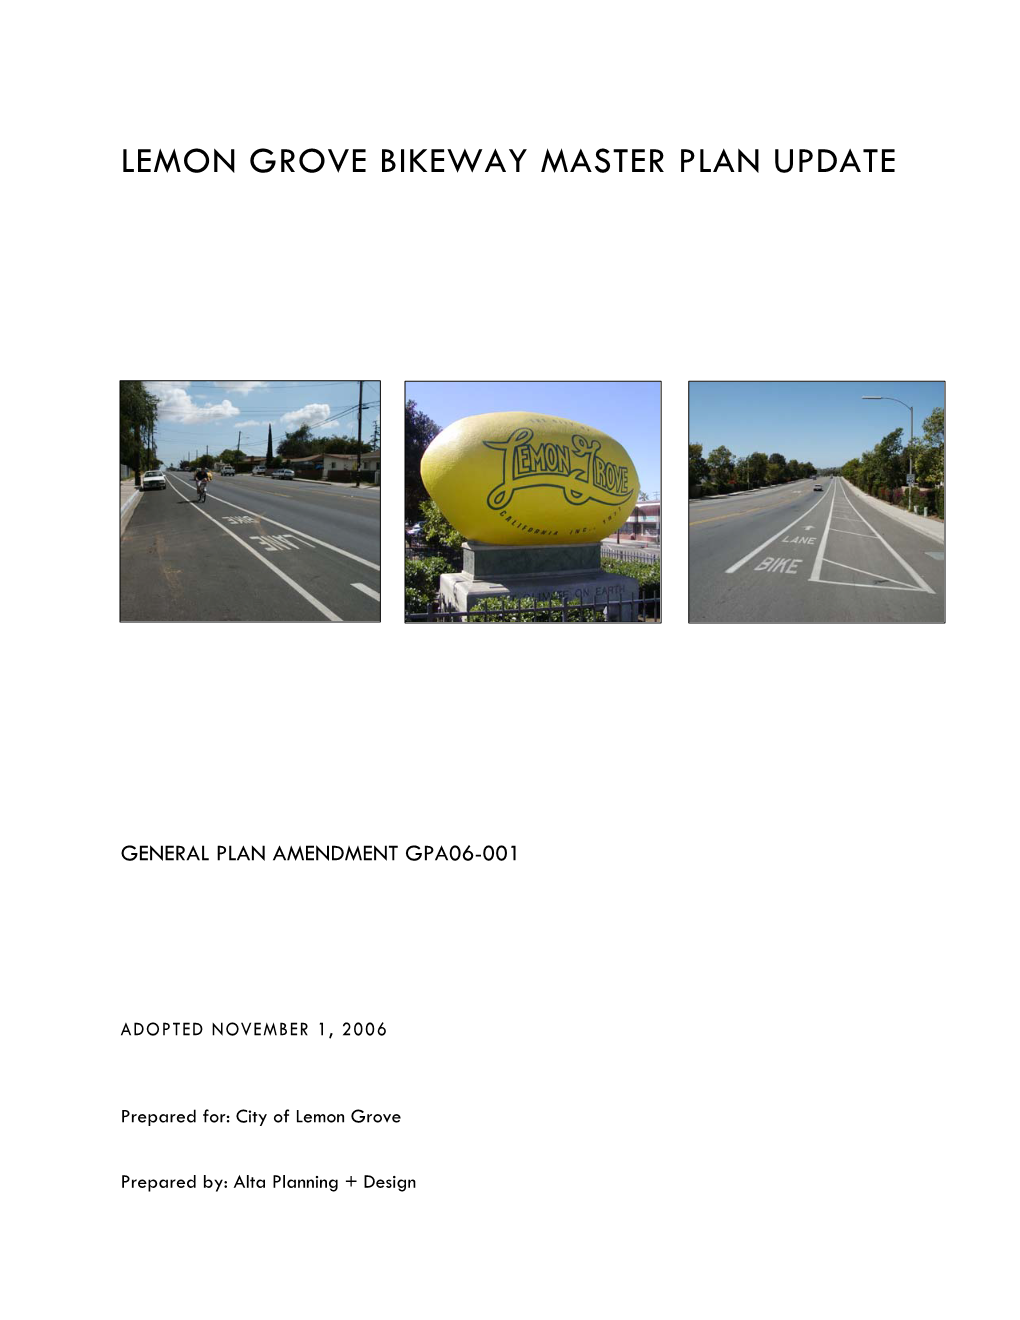 Lemon Grove Bikeway Master Plan Update